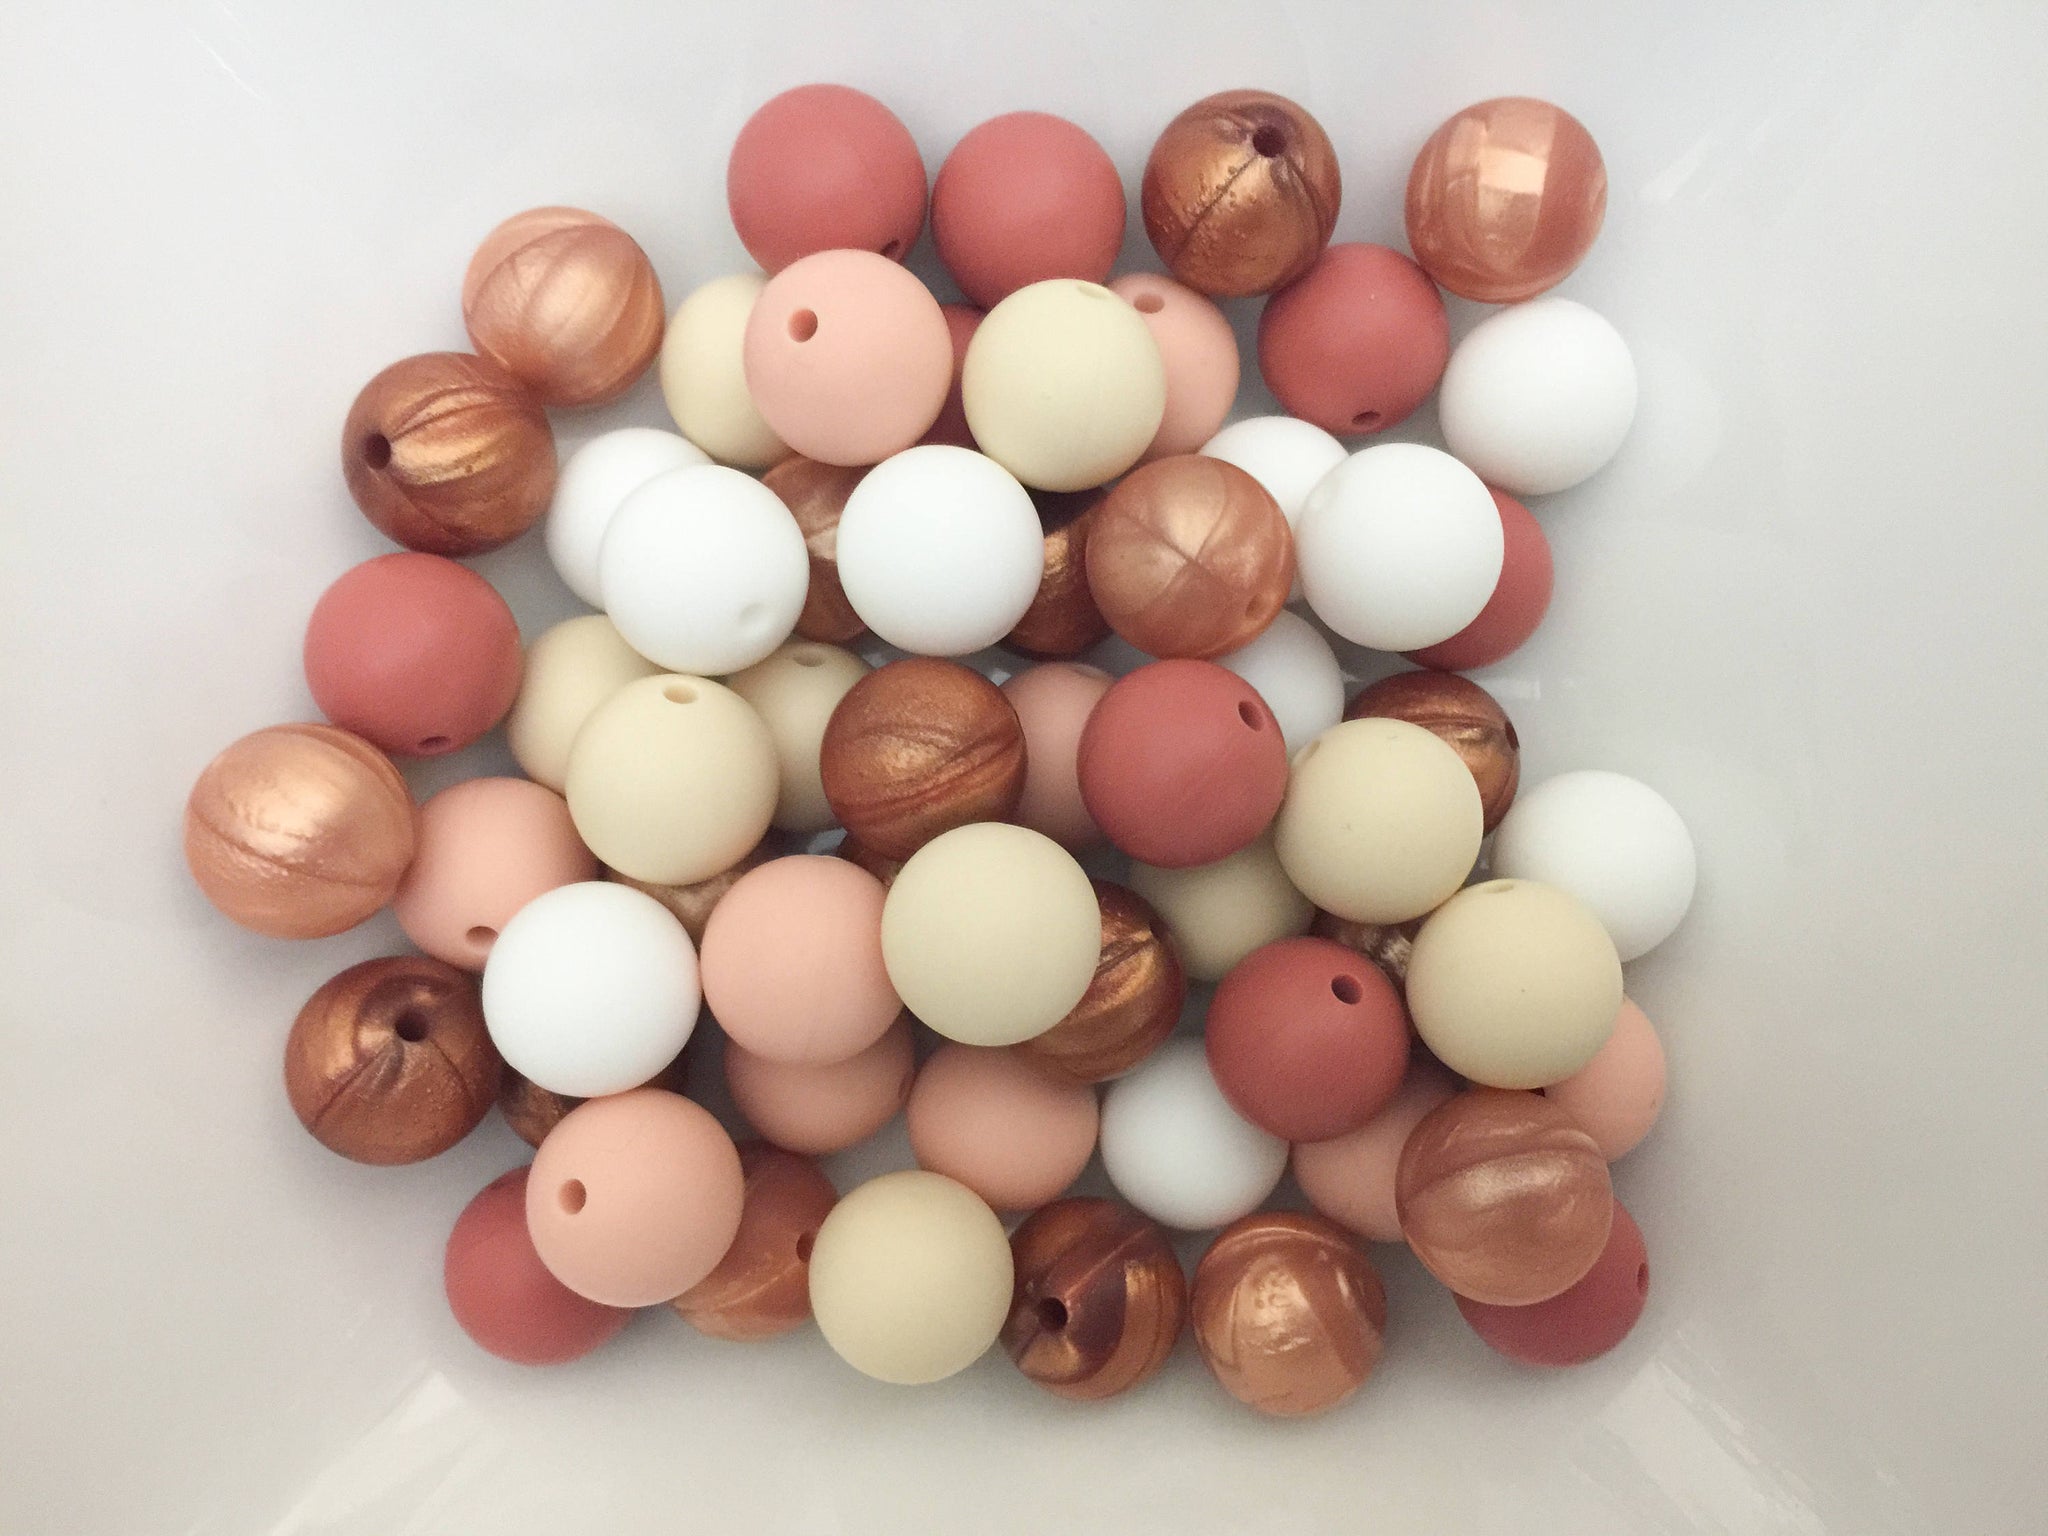 60 Bulk Silicone Beads - Rose Gold, Copper, Porcelain, Ivory, Terra, White